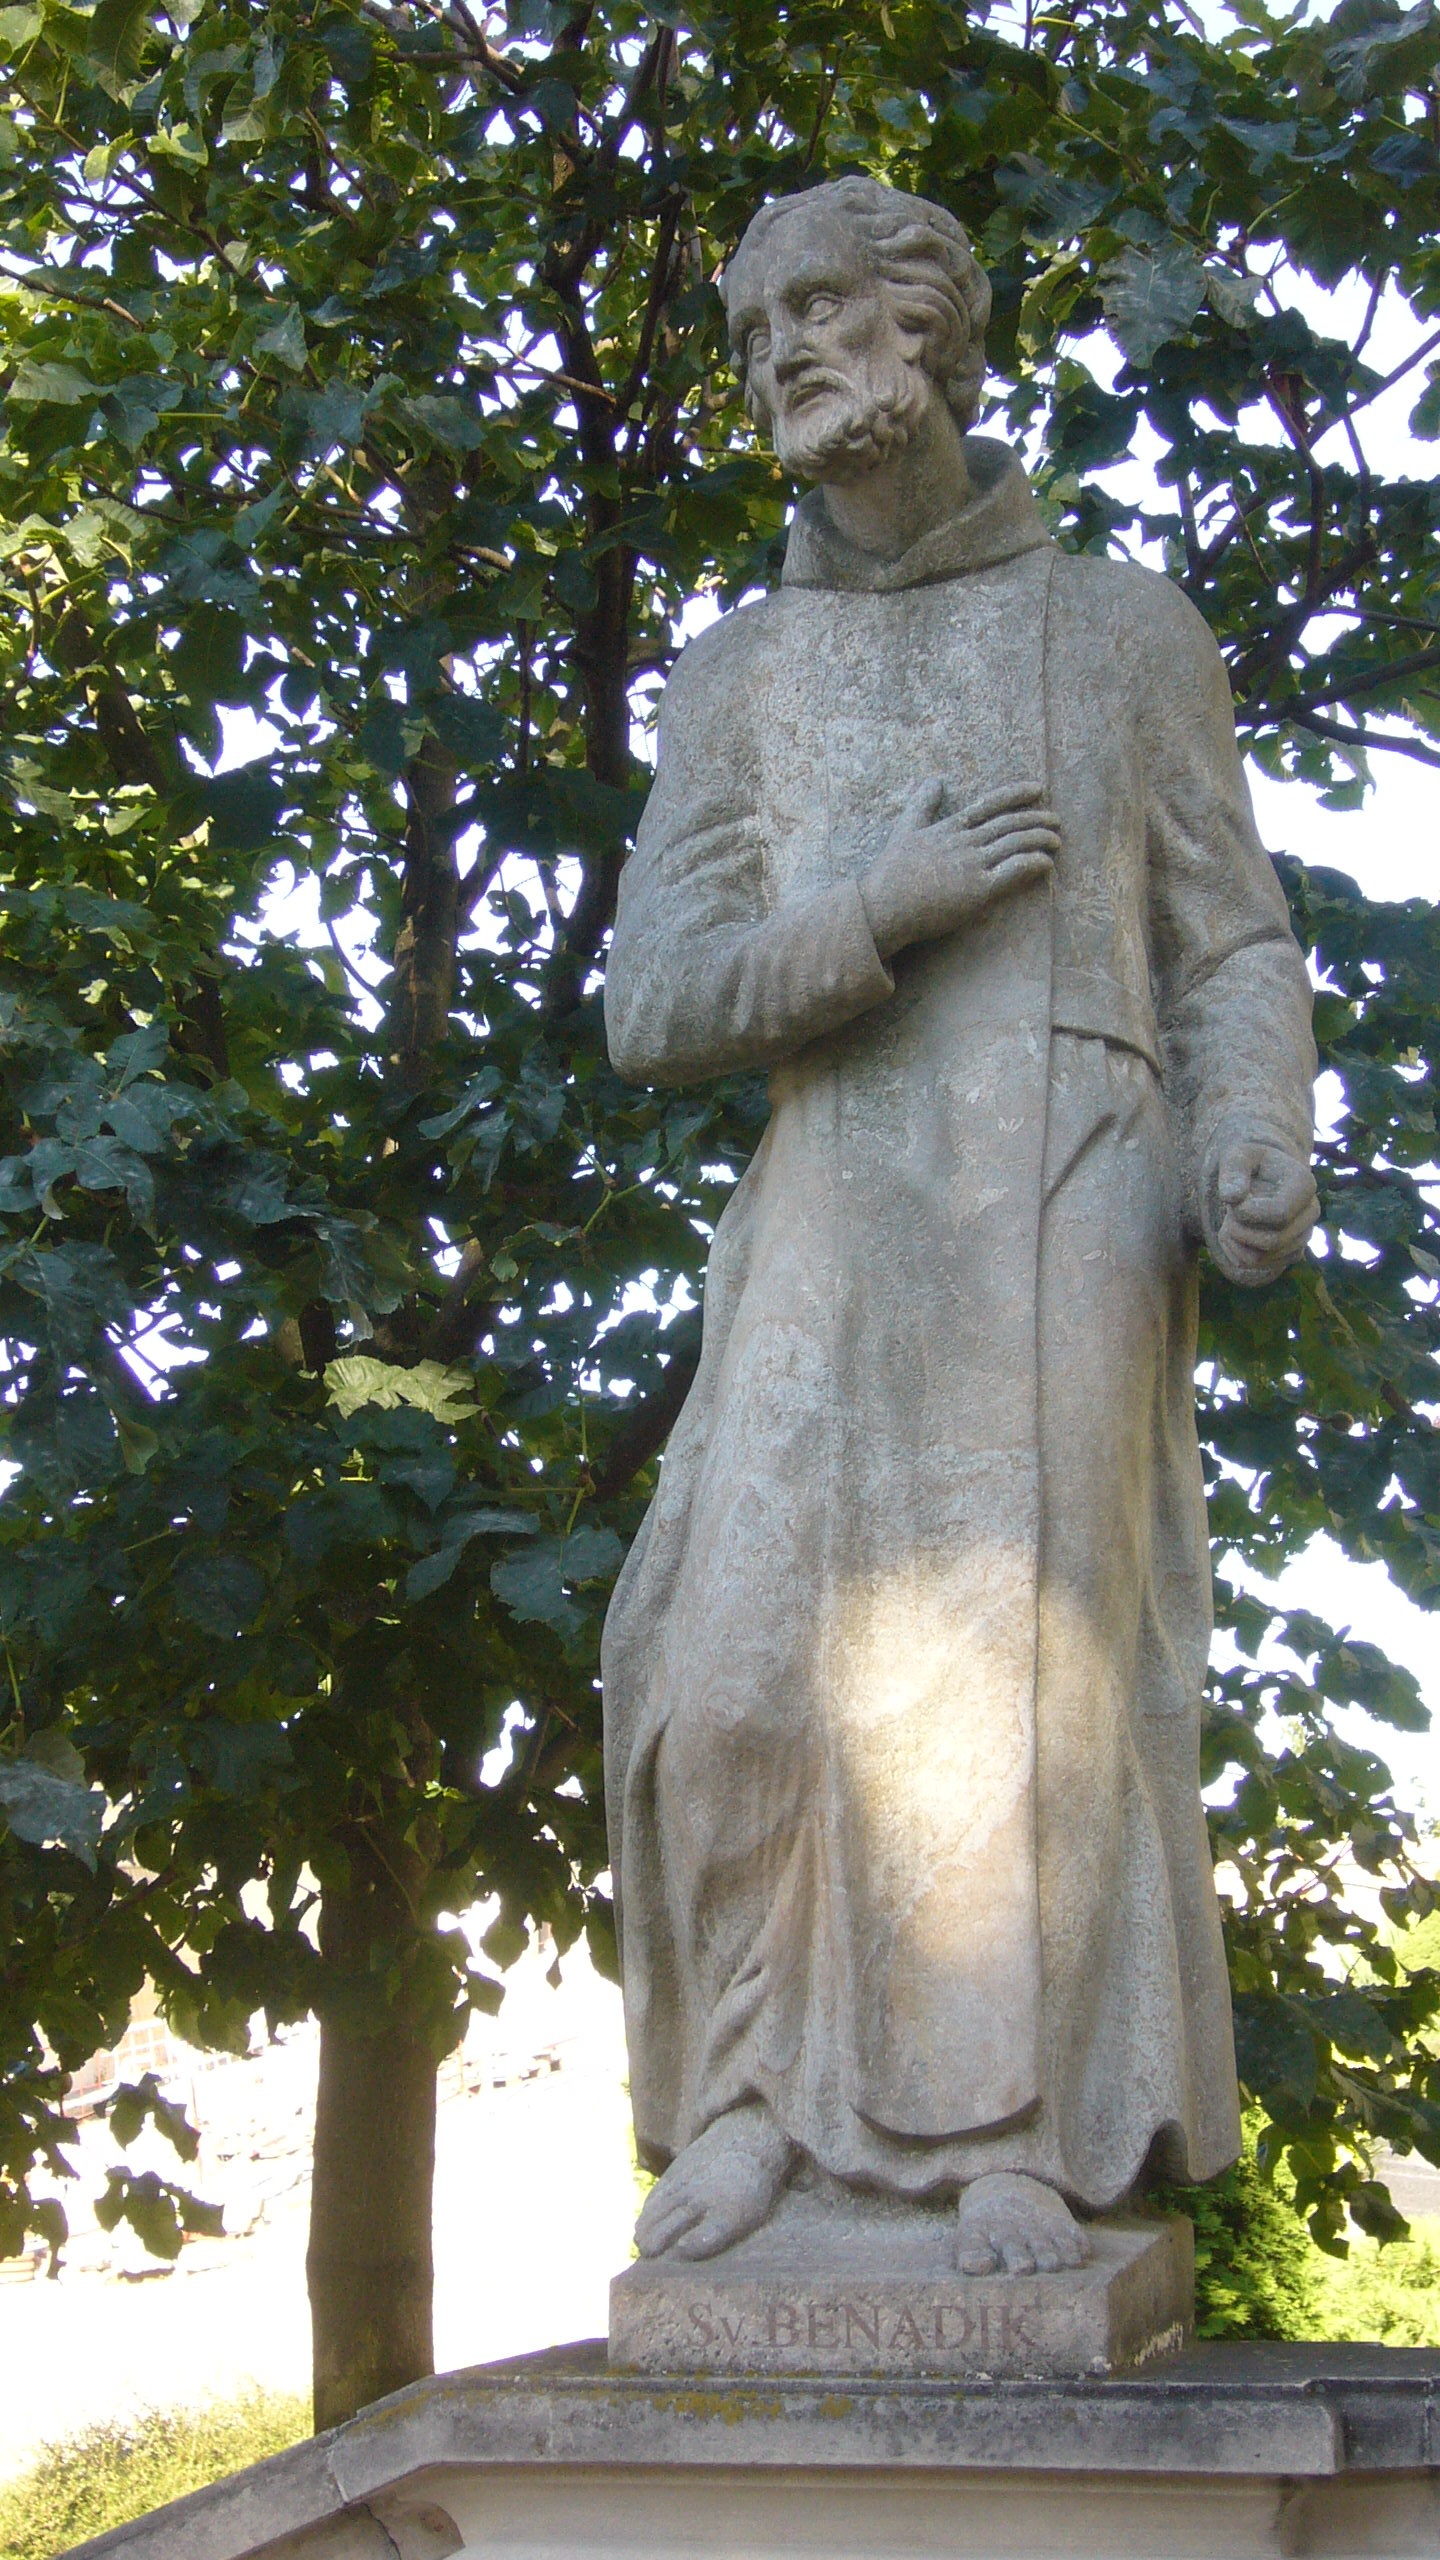 Sv. Benadik statuette